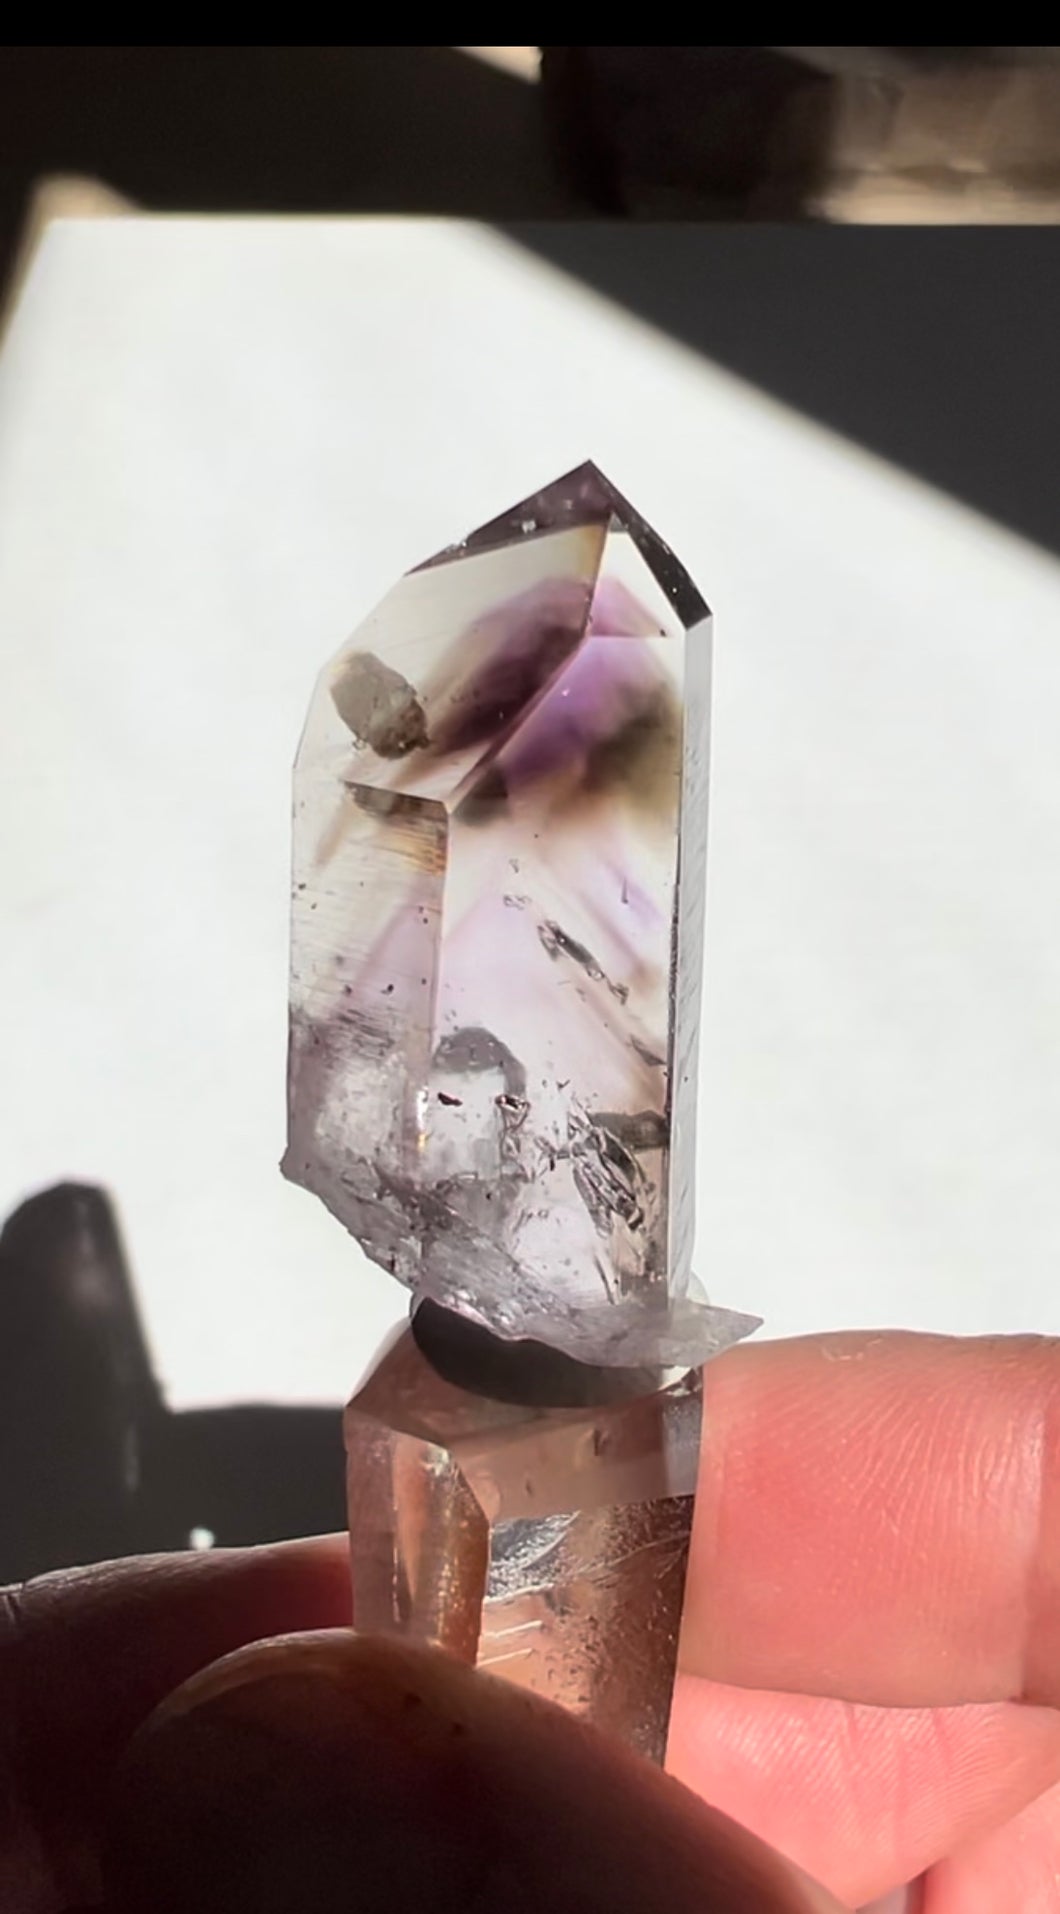 Brandberg Amethyst Crystal